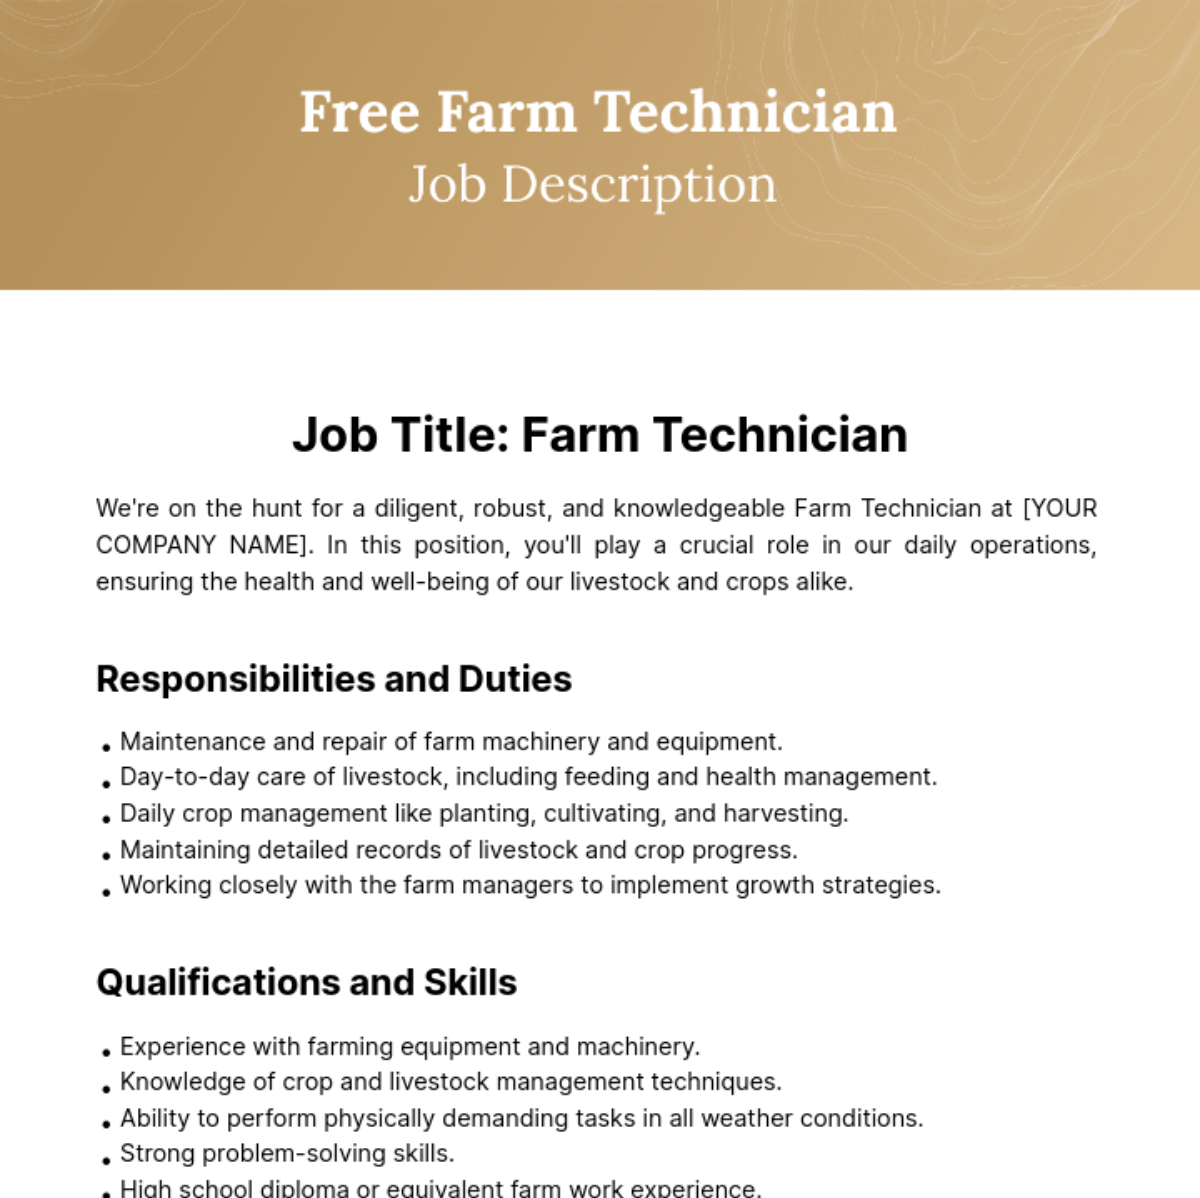 Free Farm Technician Job Description Template